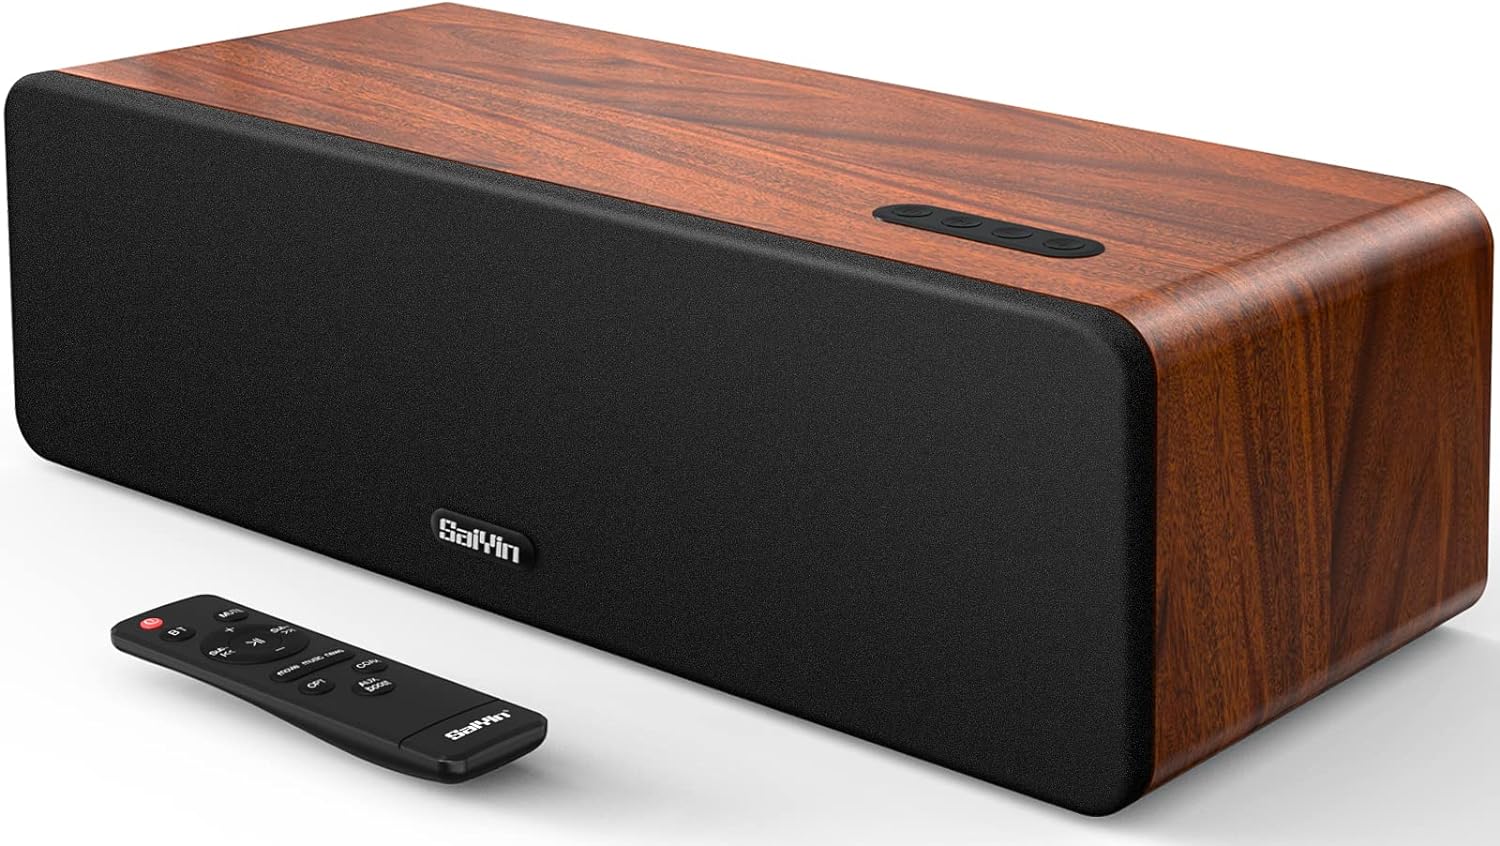 Saiyin 16.5” Wooden TV Speakers Soundbar Review